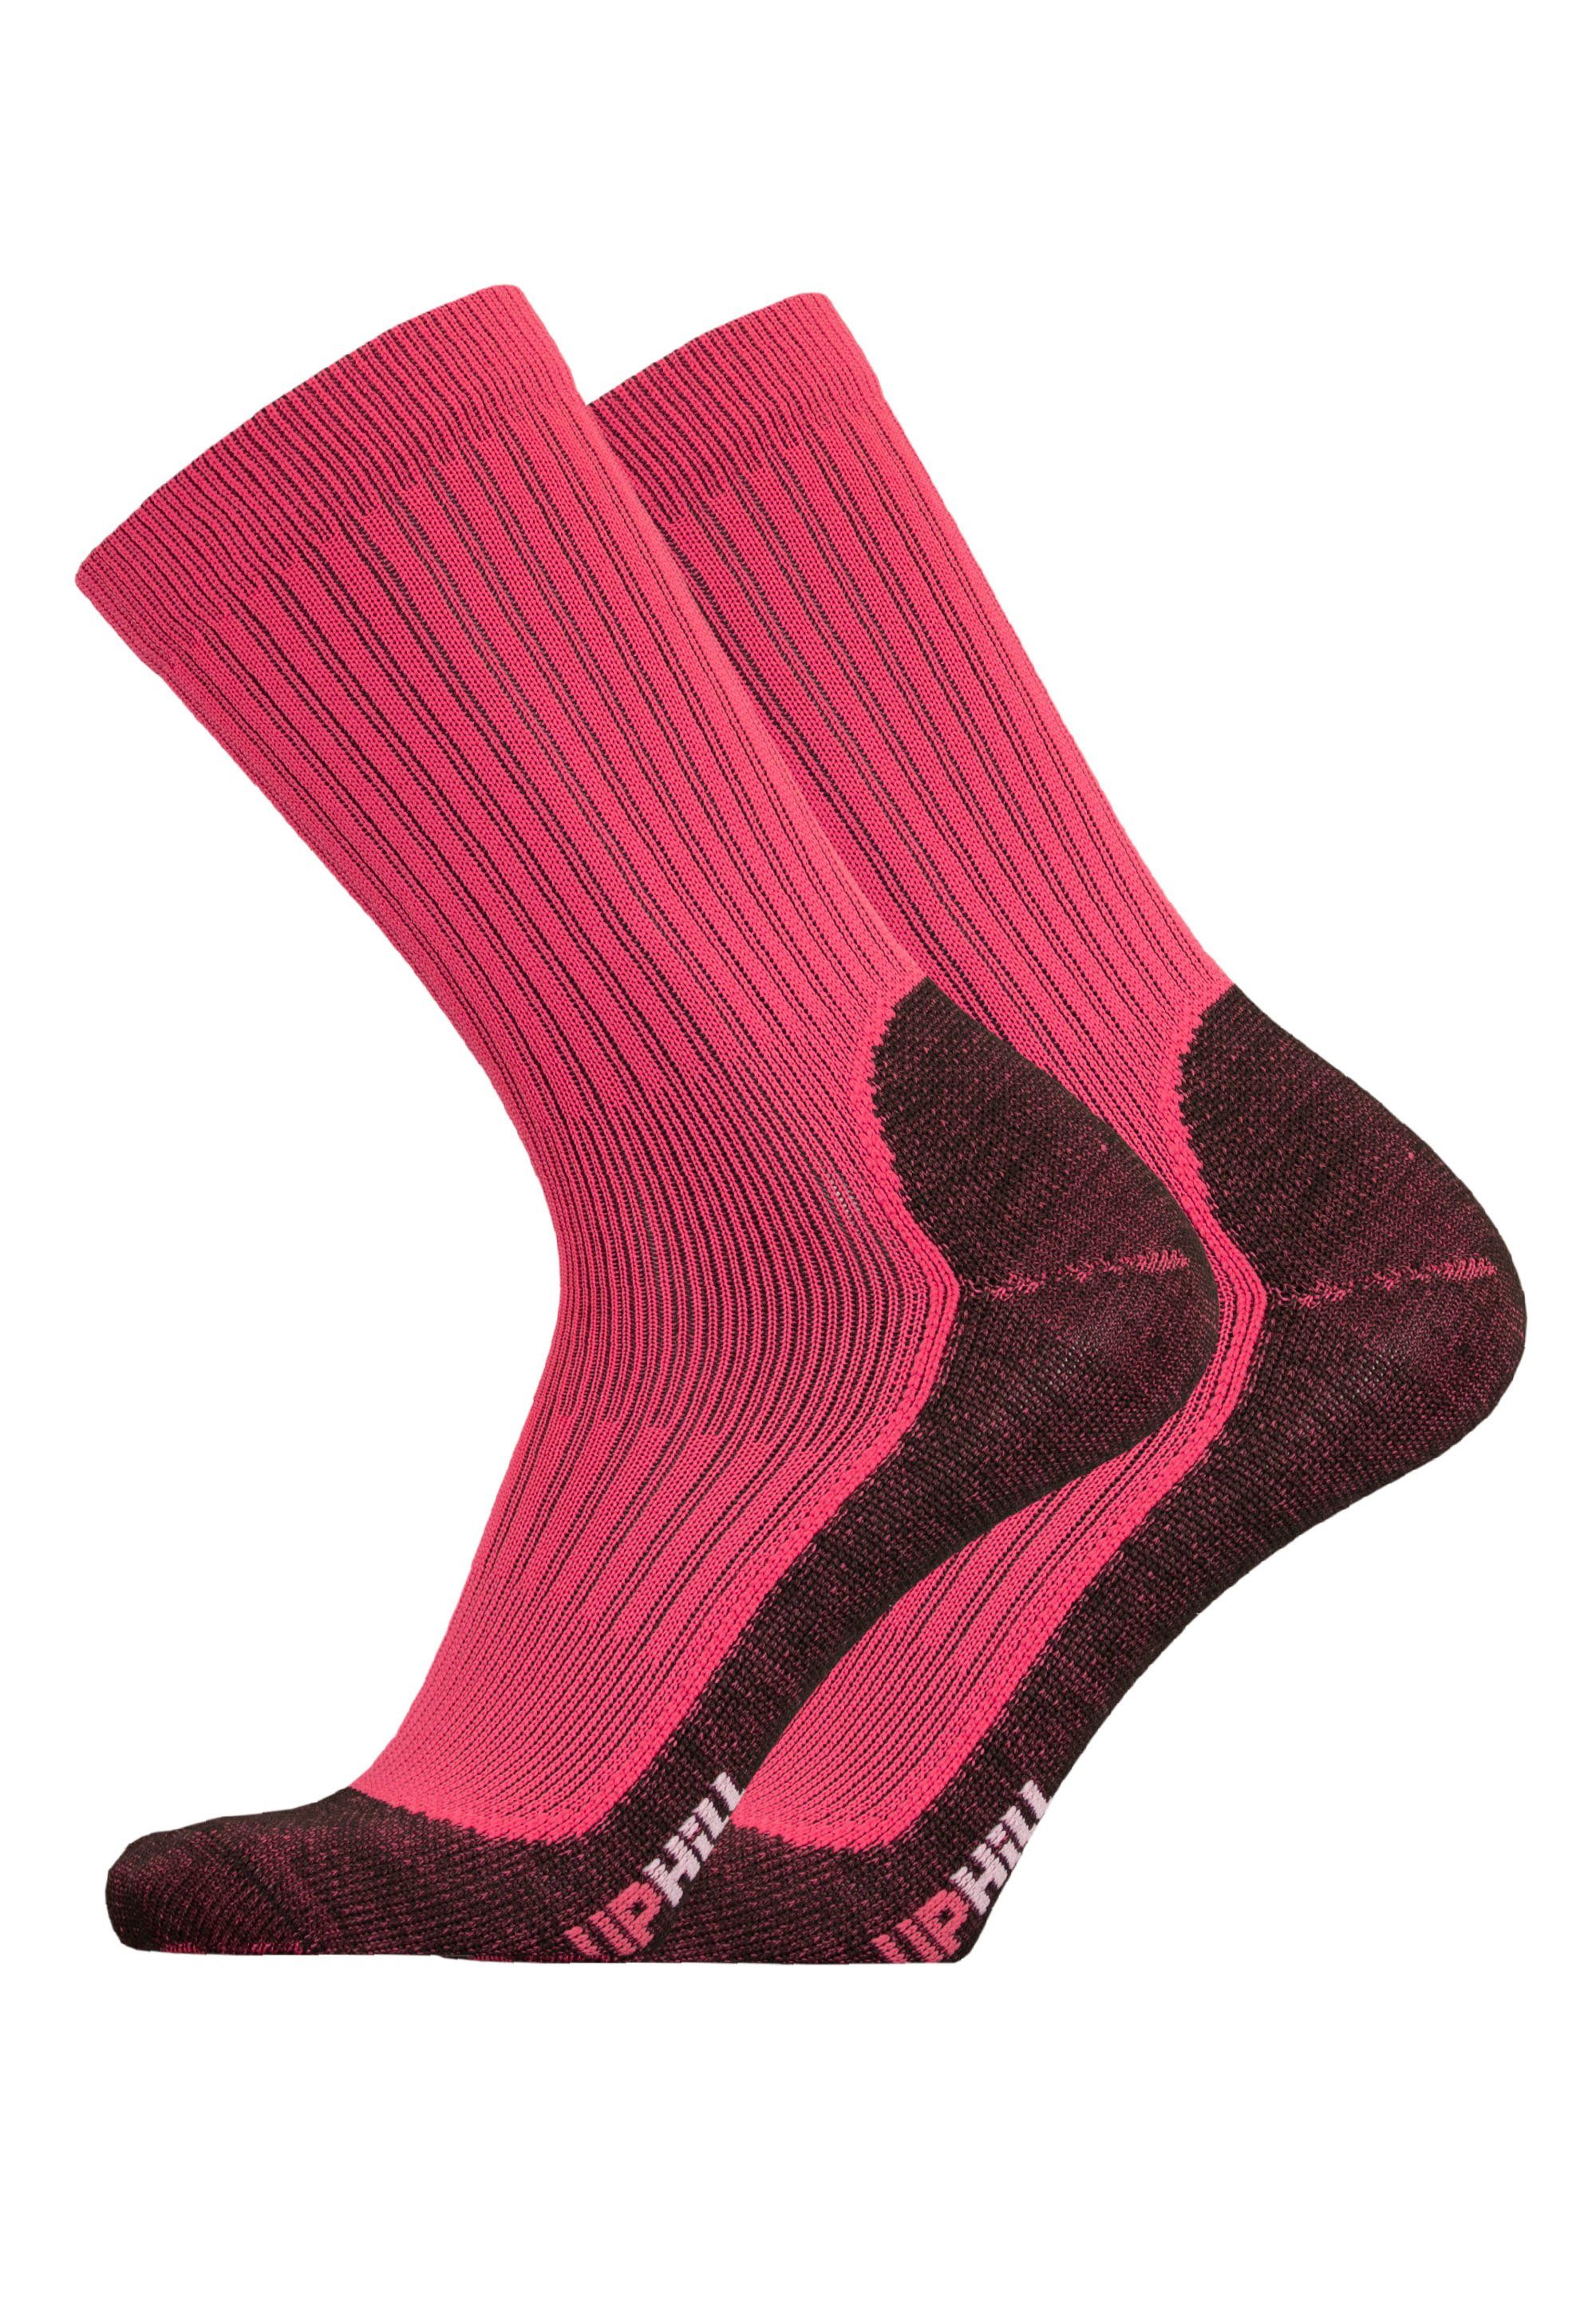 UphillSport Socken WINTER XC 2er Pack (2-Paar) mit atmungsaktiver Funktion pink-grau